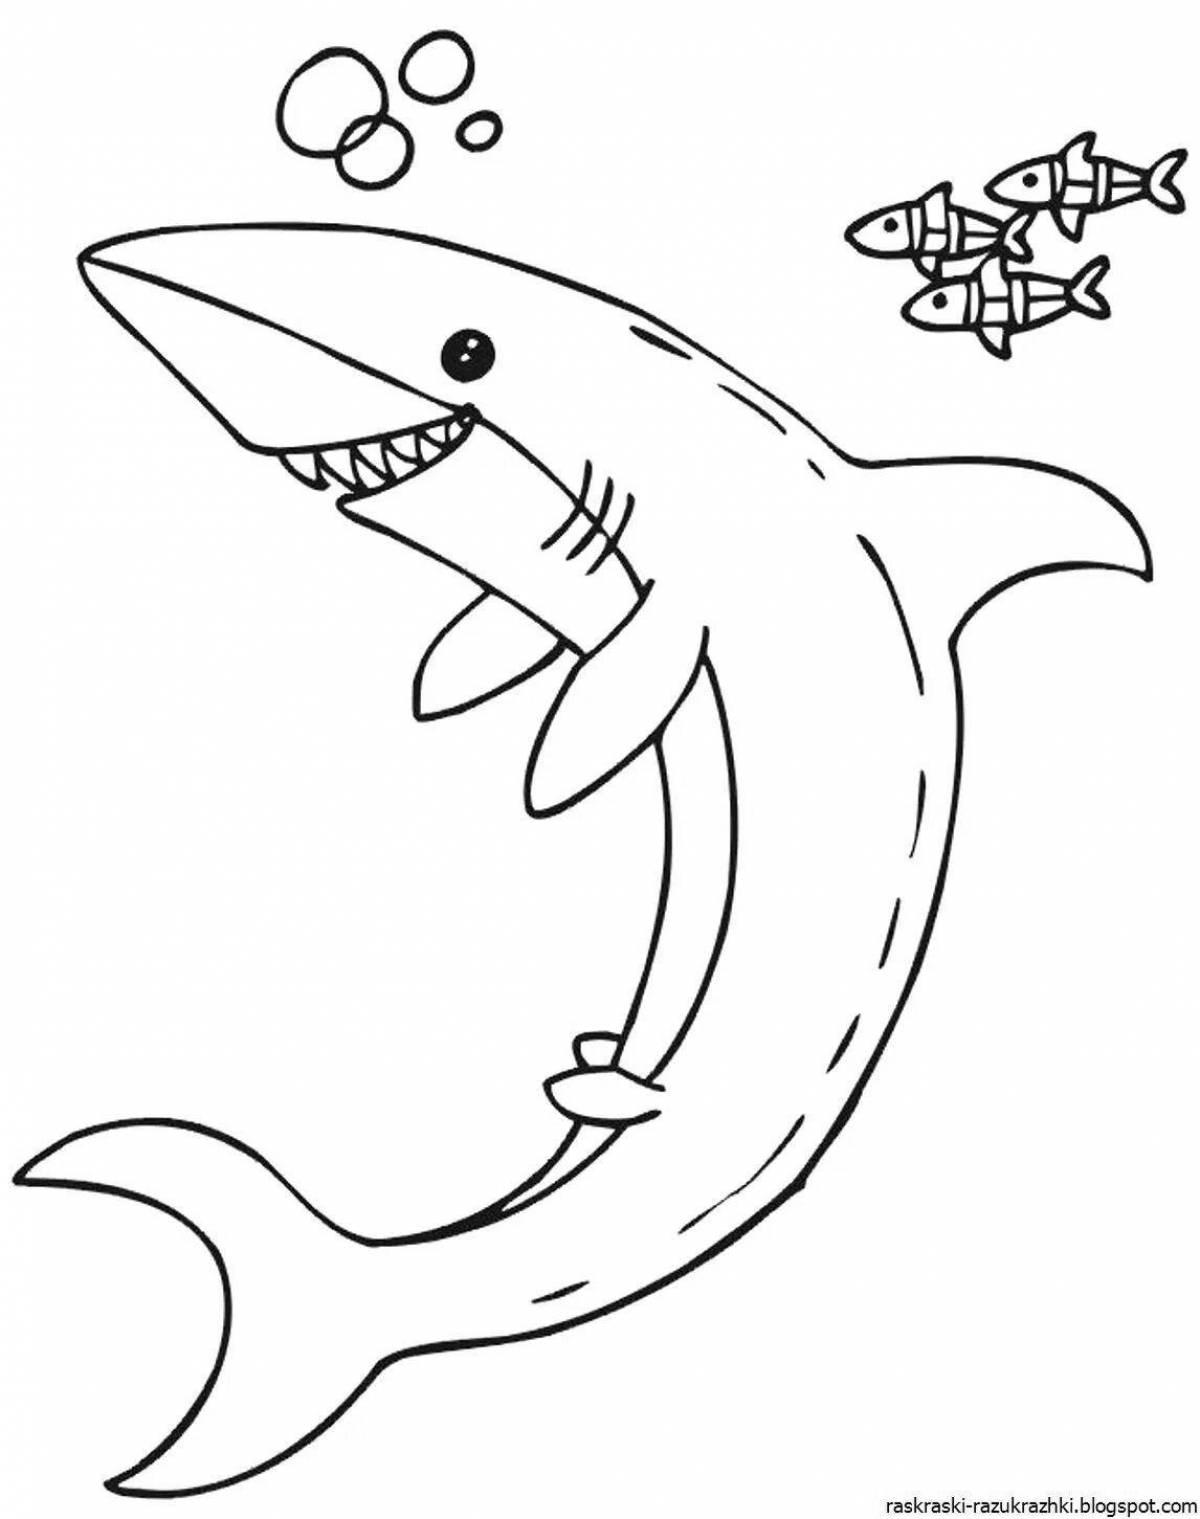 Цветная взрывная акула-раскраска для детей